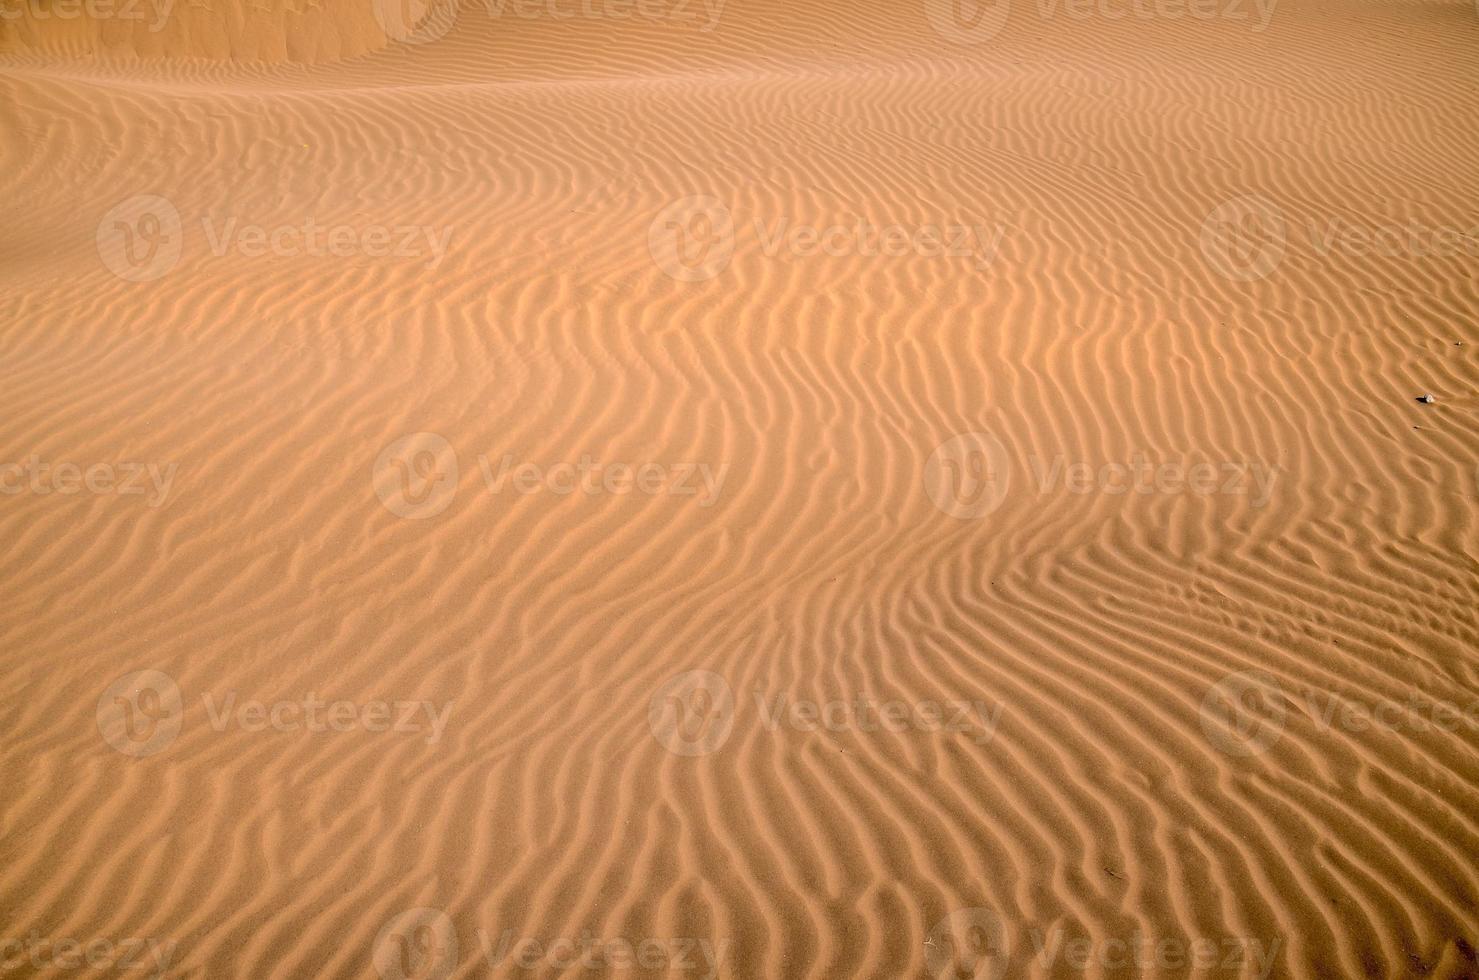 ondas dentro a areia foto